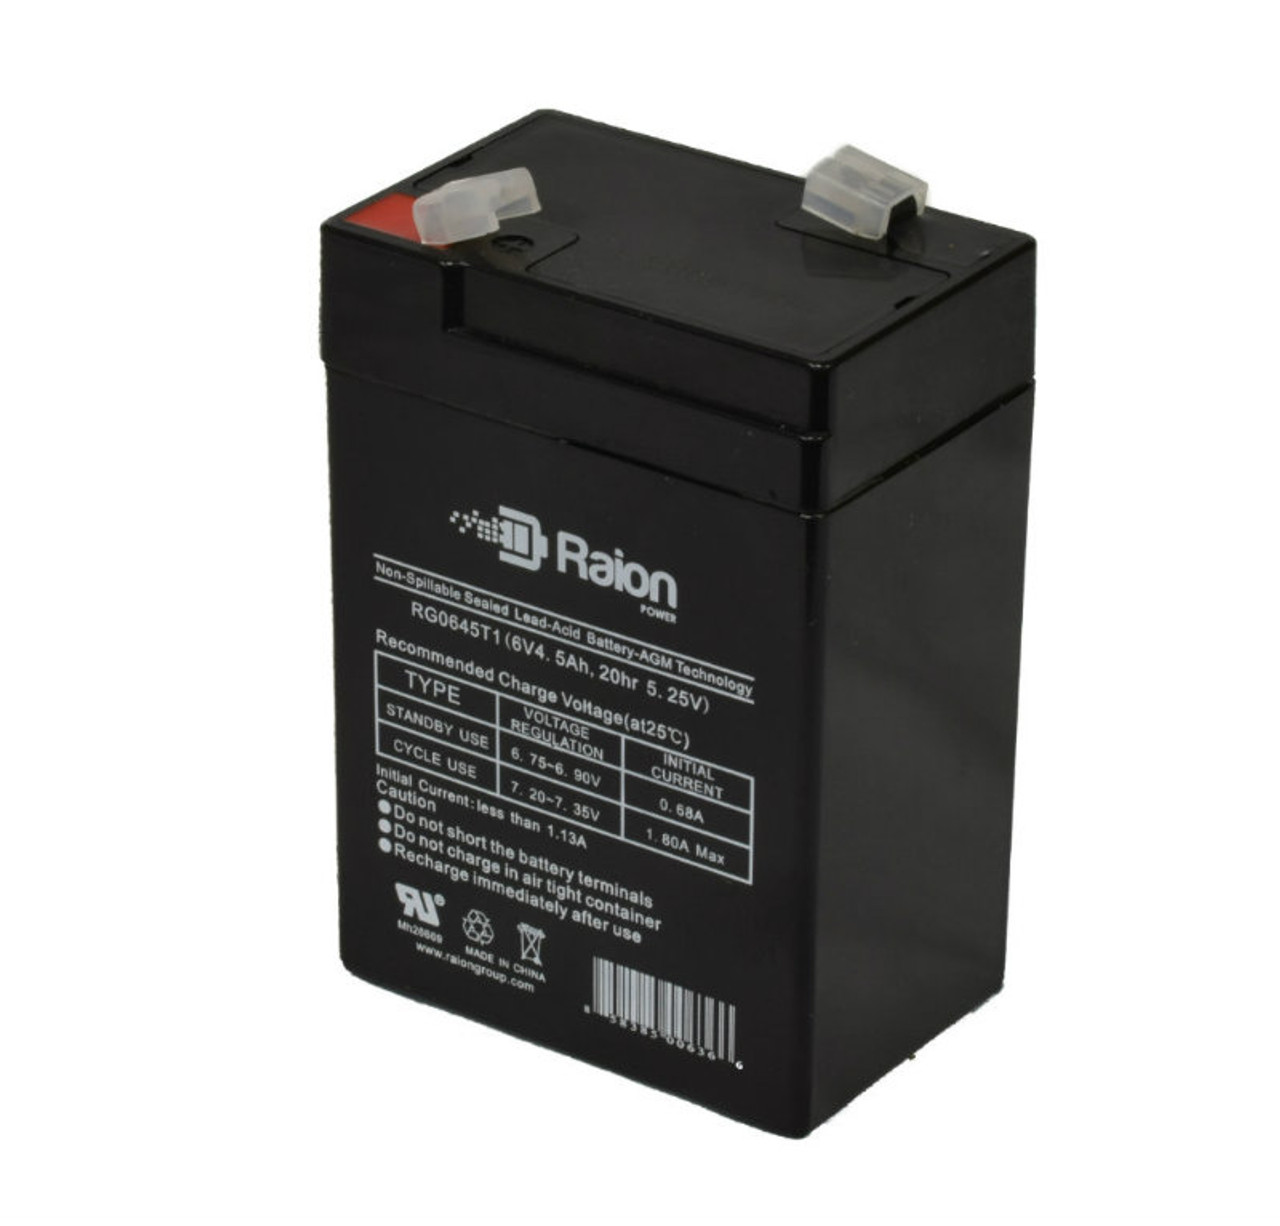 Raion Power RG0645T1 6V 4.5Ah Replacement Battery Cartridge for Sonnenschein 7190390